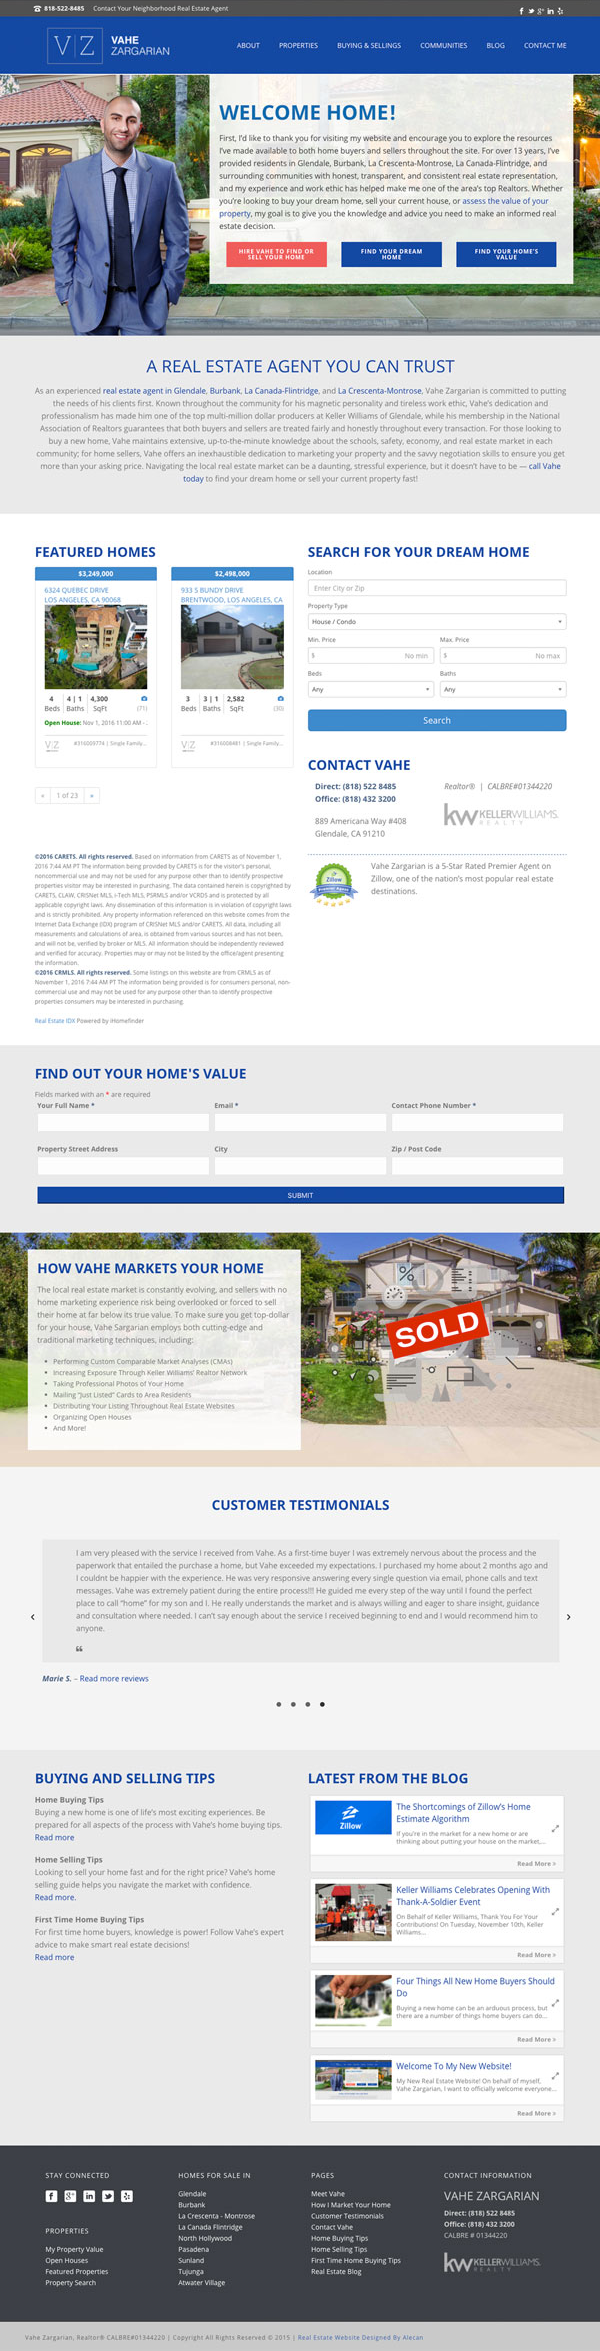 Vahe Zargarian Real Estate - Website